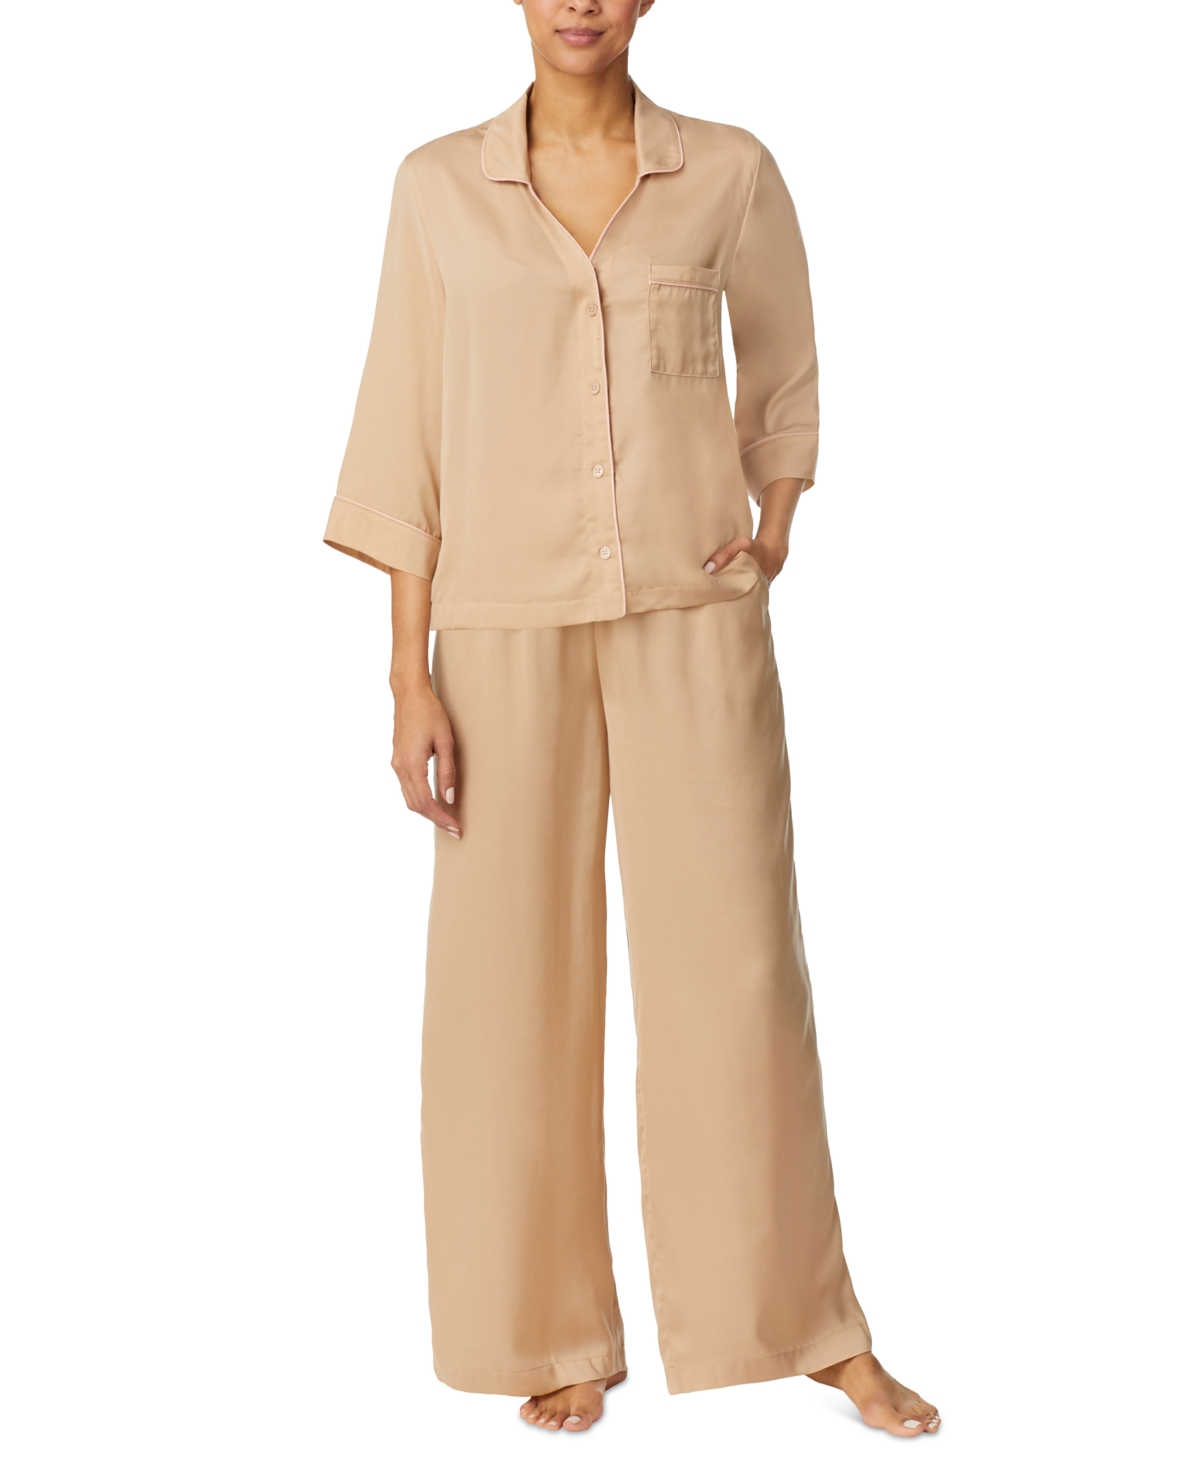 Felina Loungewear Women's Pajamas & Women's Robes - Macy's